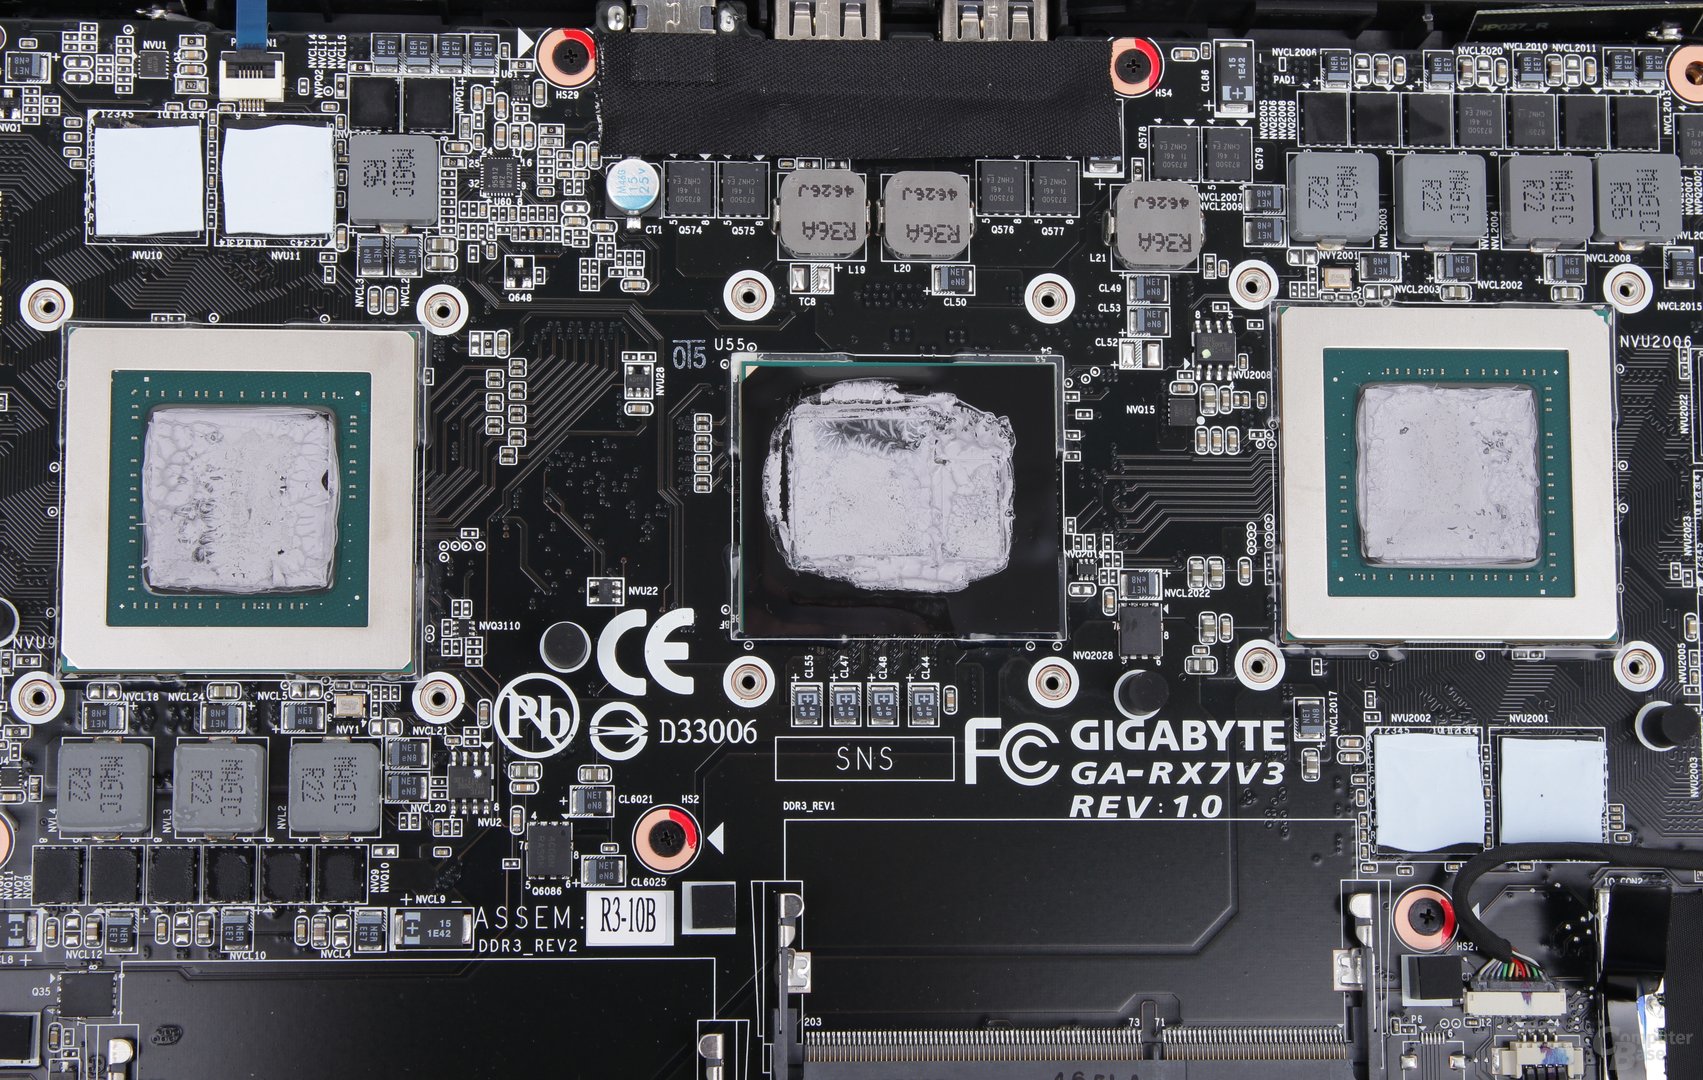 2 x GeForce GTX 970M, zentral Core i7-4870HQ